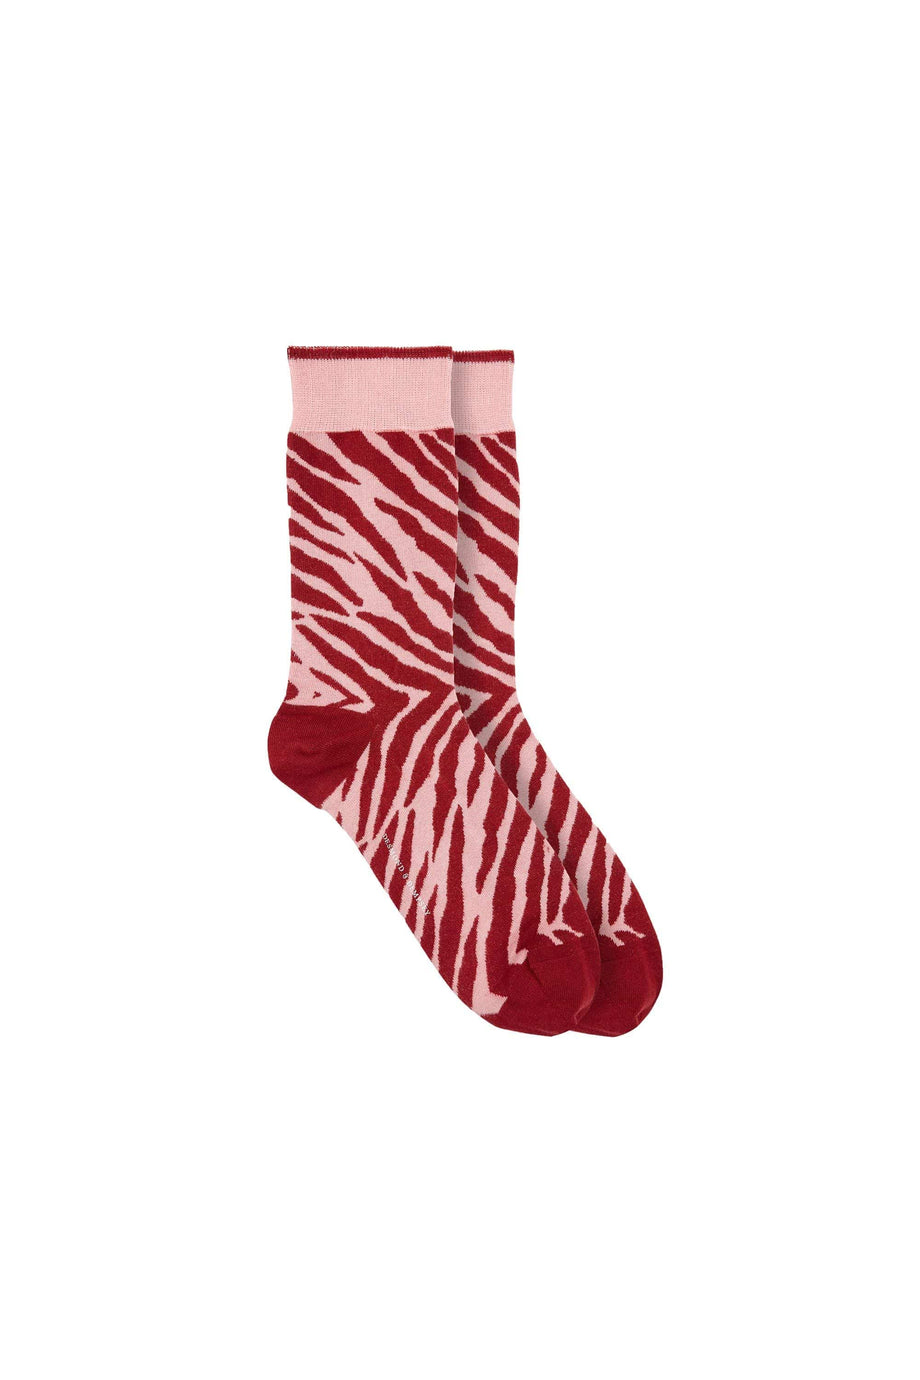 Women's Socks Tiger Print Pink